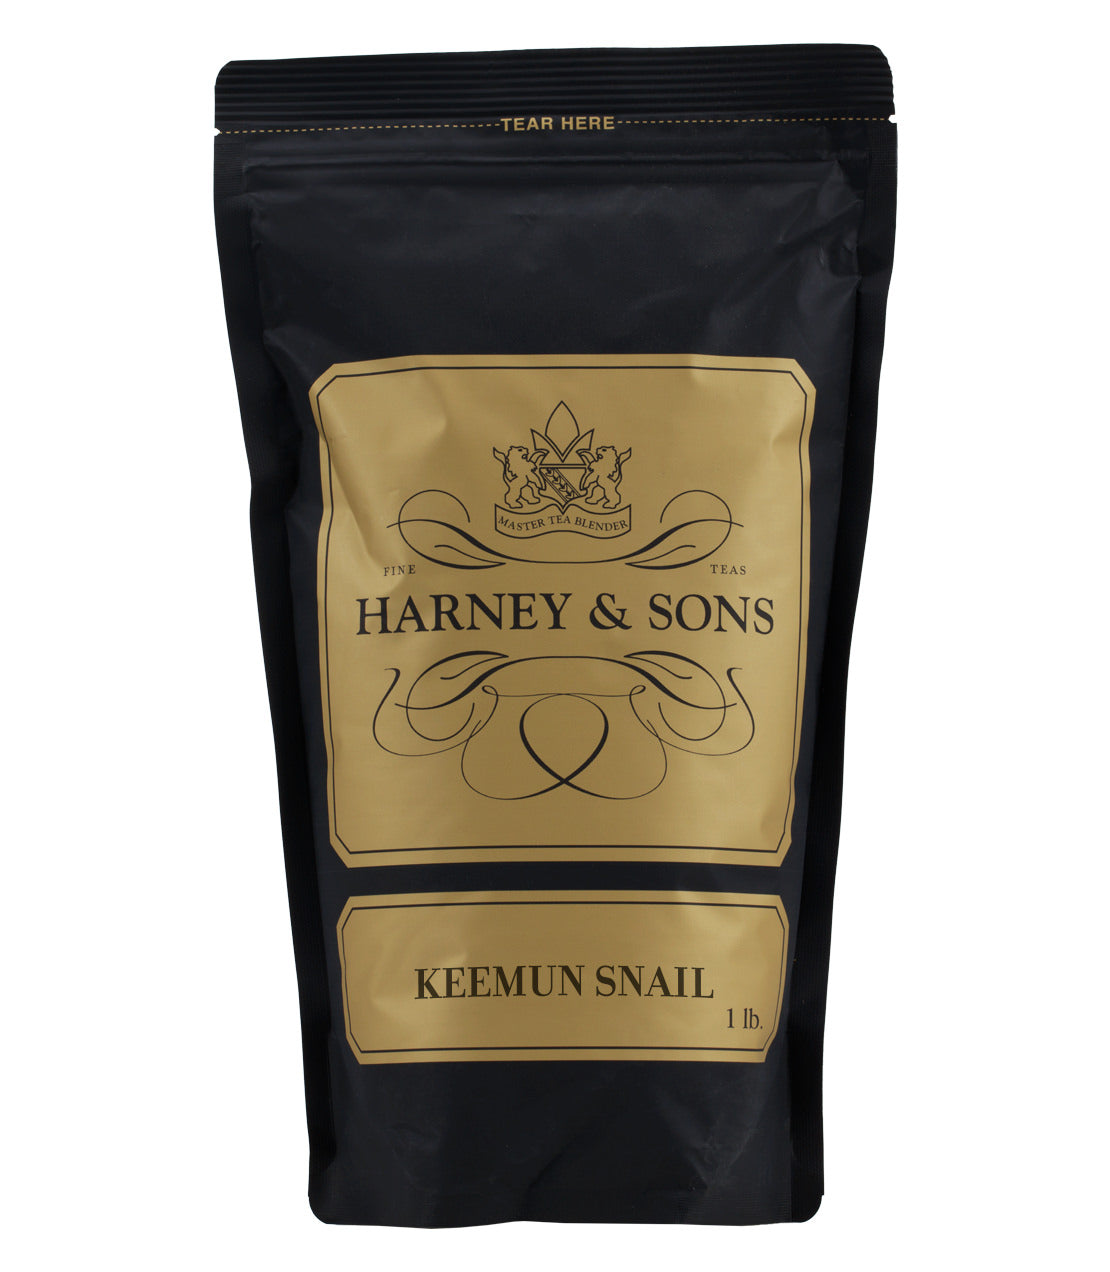 Keemun Snail - Loose 1 lb. Bag - Harney & Sons Fine Teas